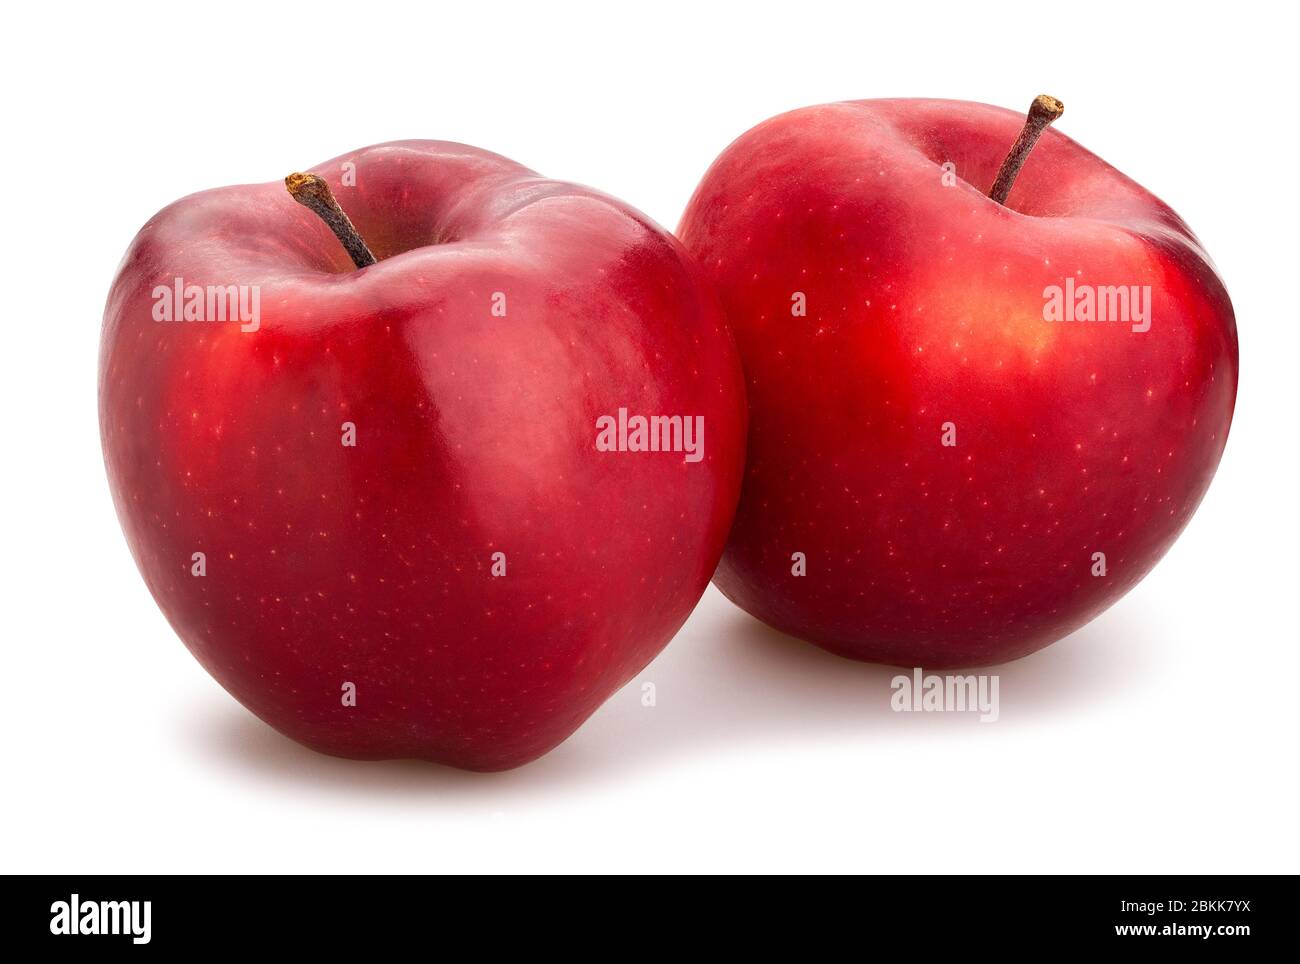 https://c8.alamy.com/comp/2BKK7YX/red-delicious-apple-path-isolated-on-white-2BKK7YX.jpg